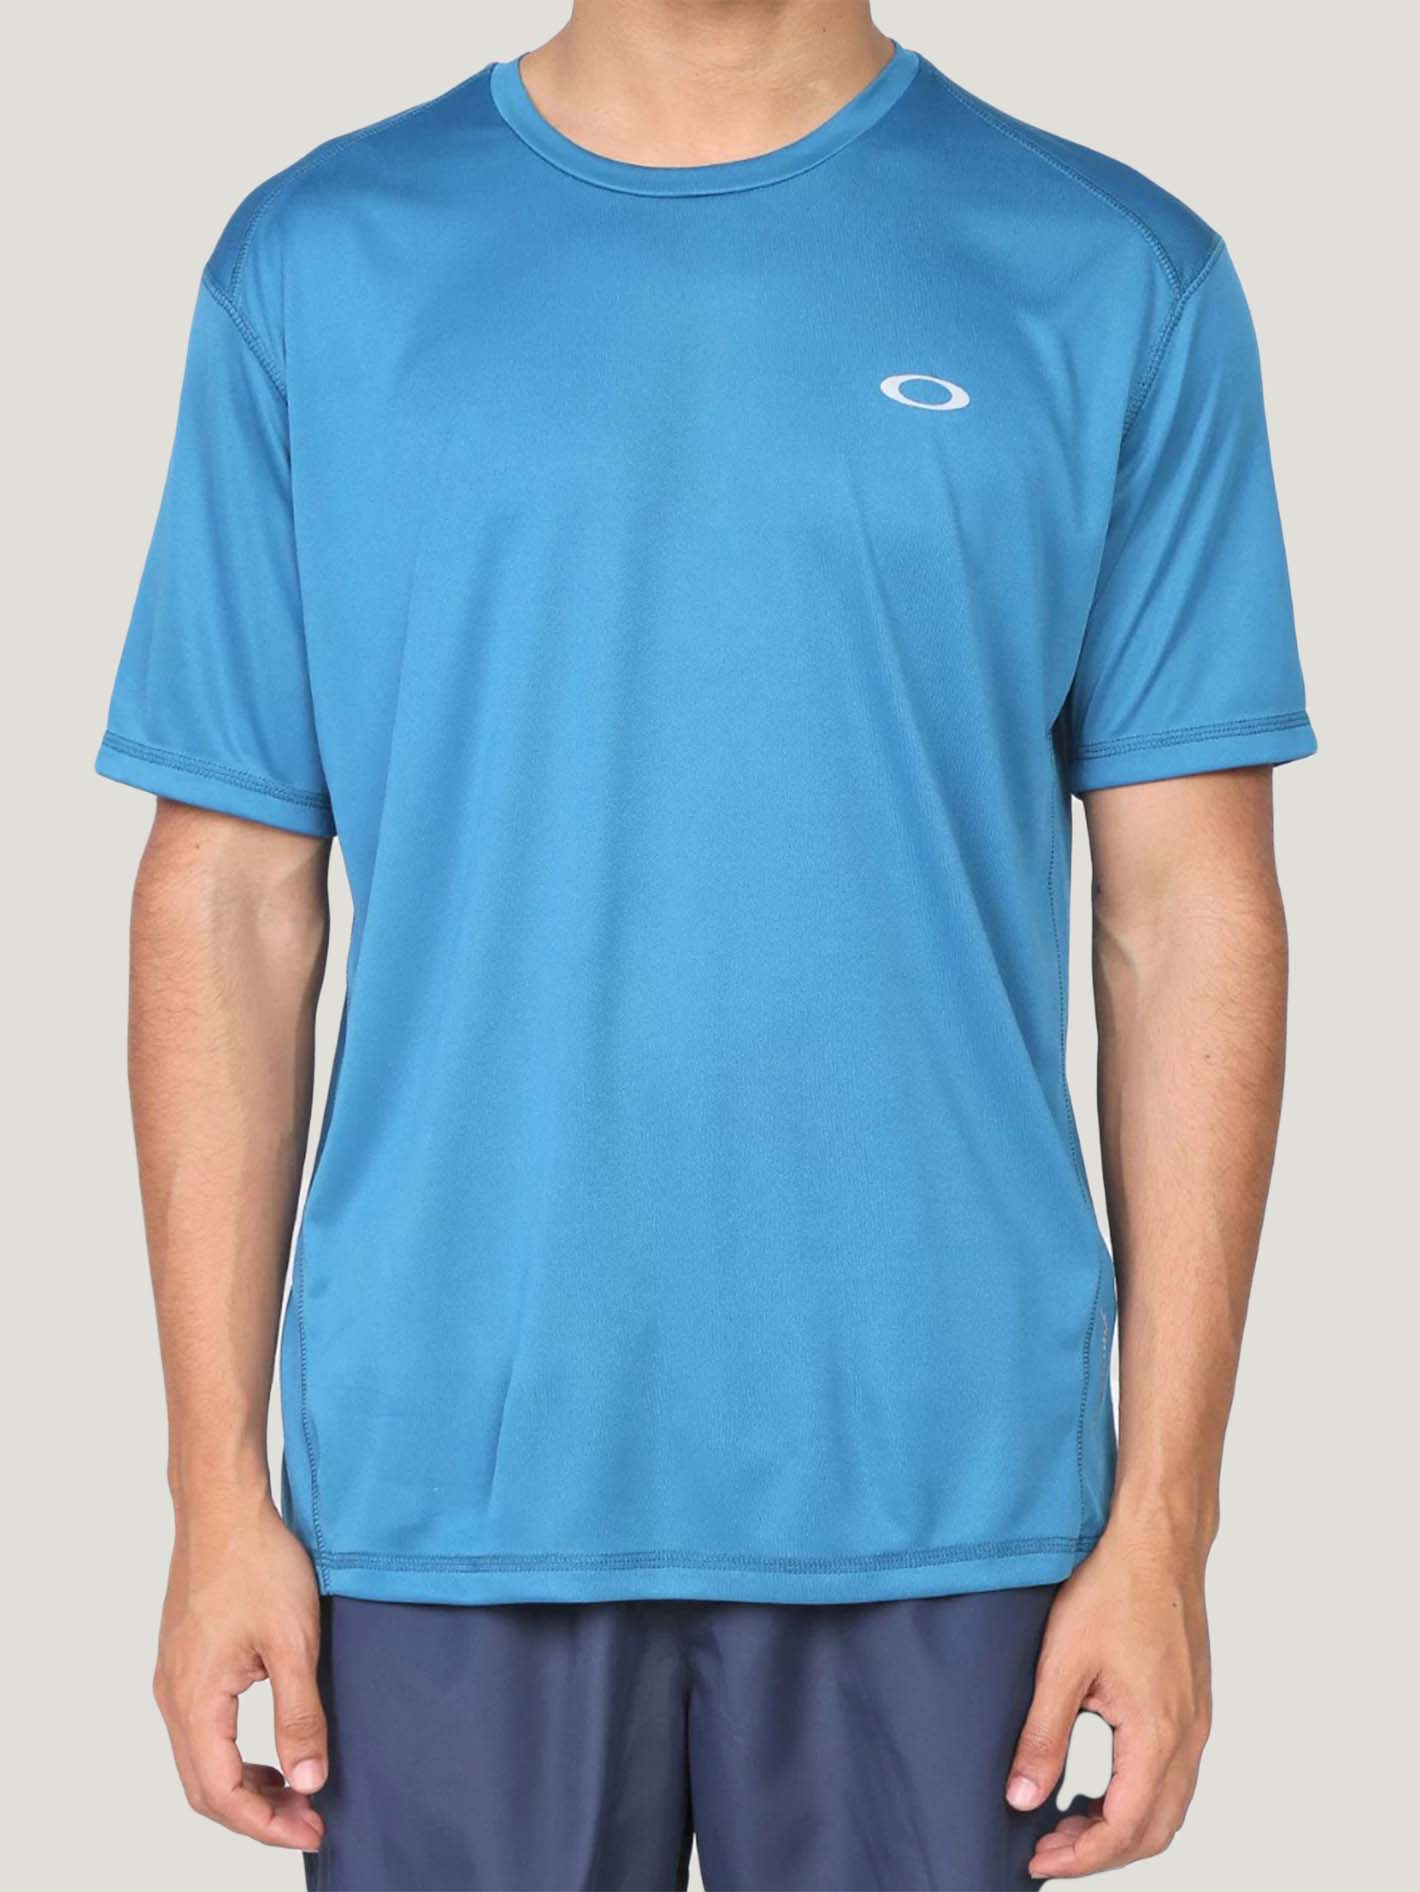 Camiseta Oakley Daily Sport Branca Masculina - 457426br-100